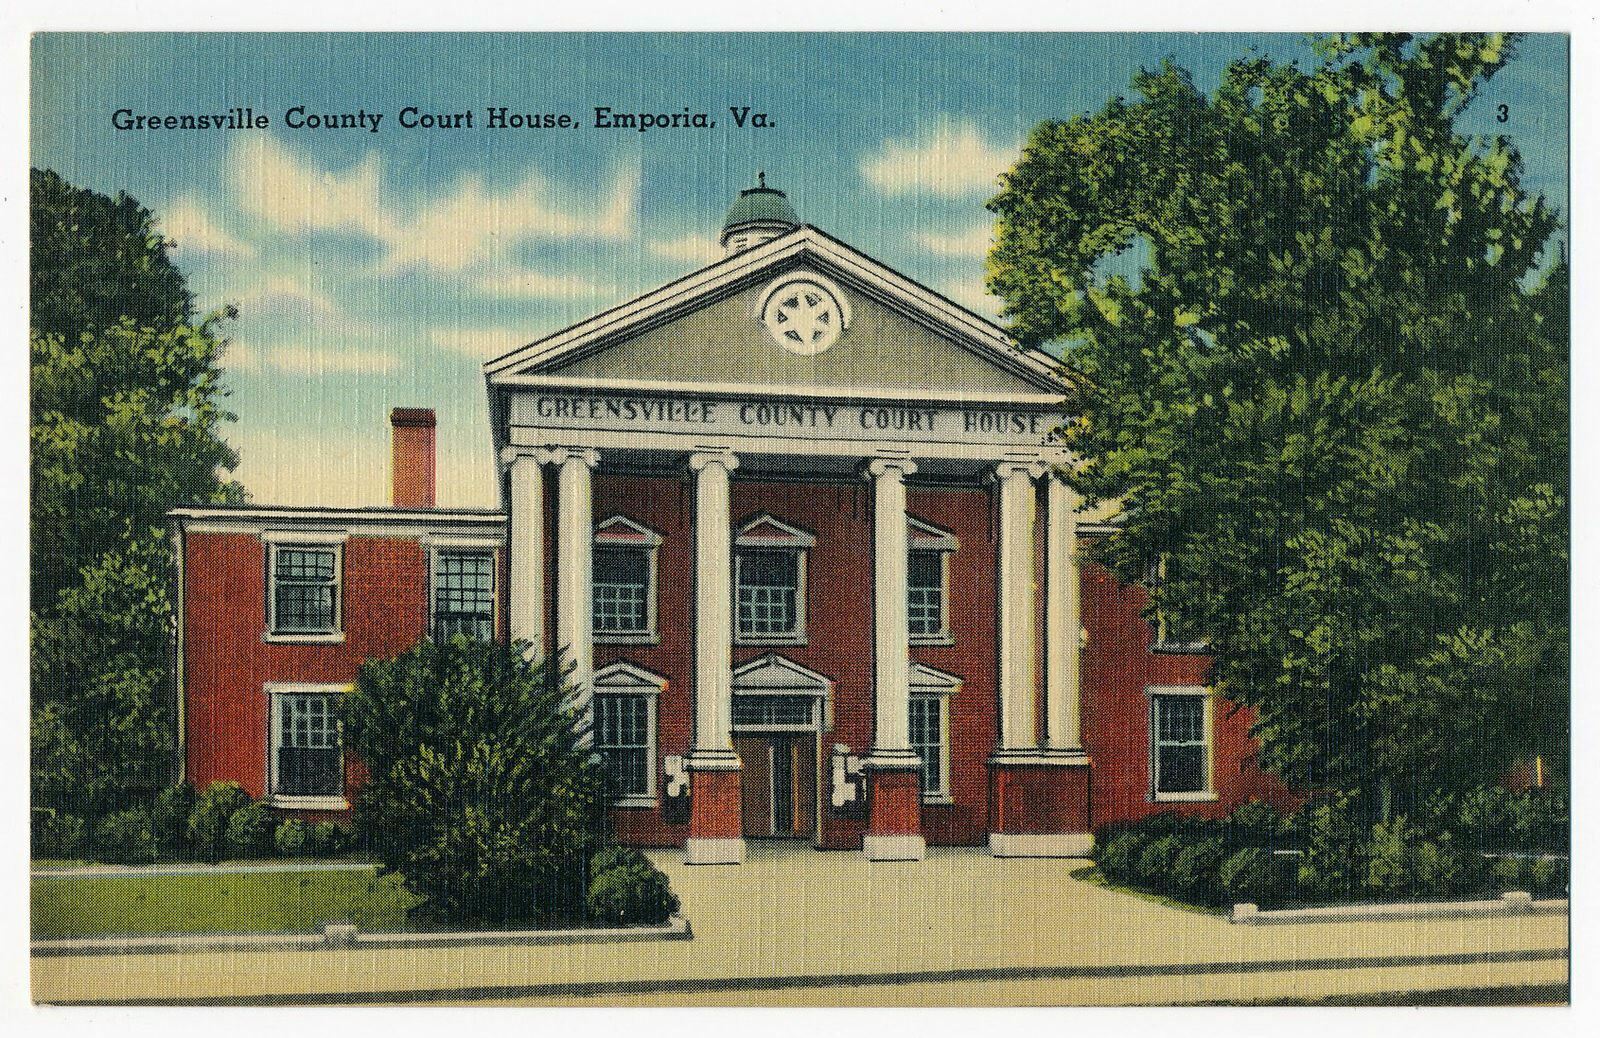 Greensville County Court House, Emporia, Virginia